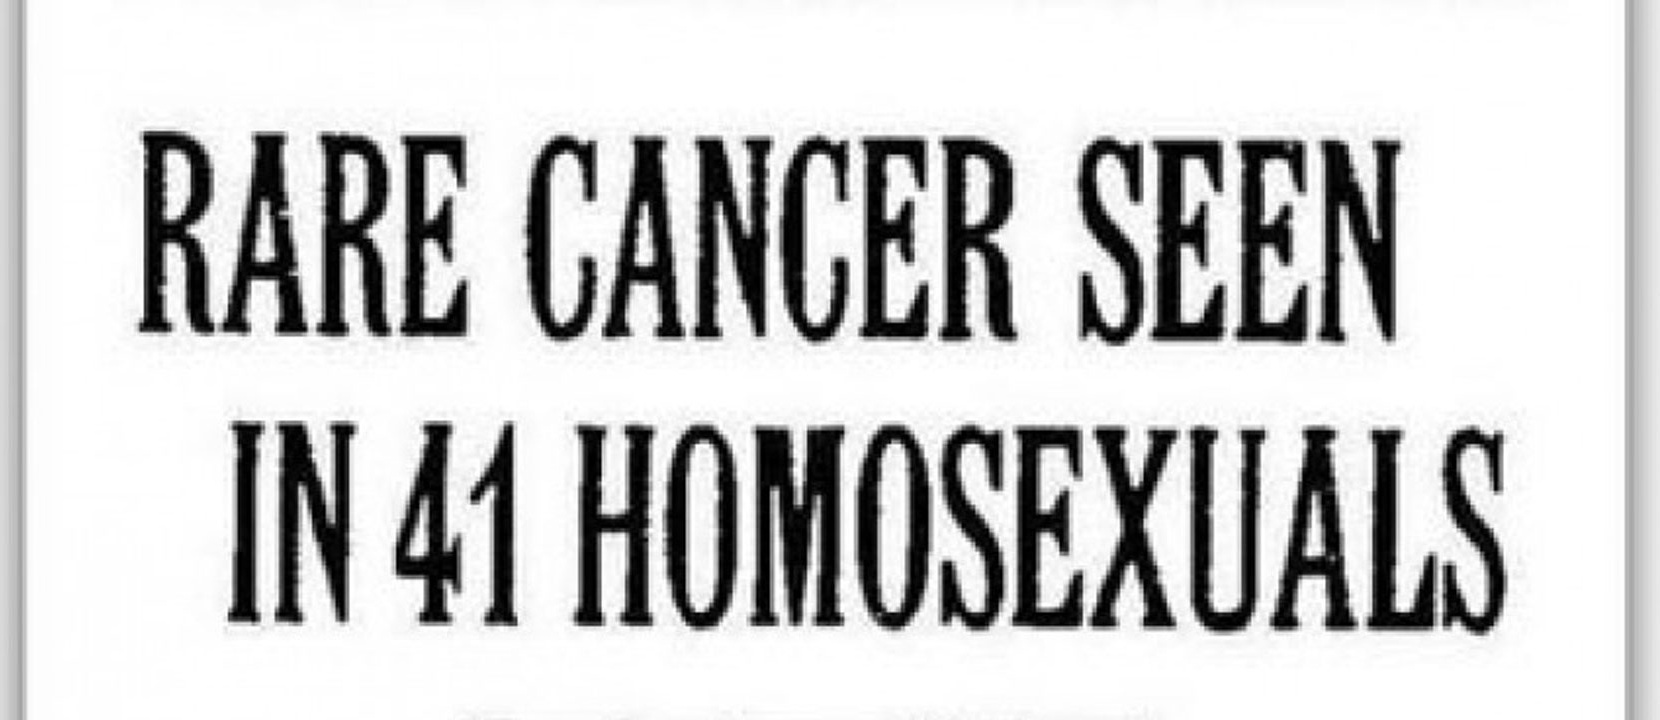 Nieuwe ziekte teistert Amerikaanse homofielen